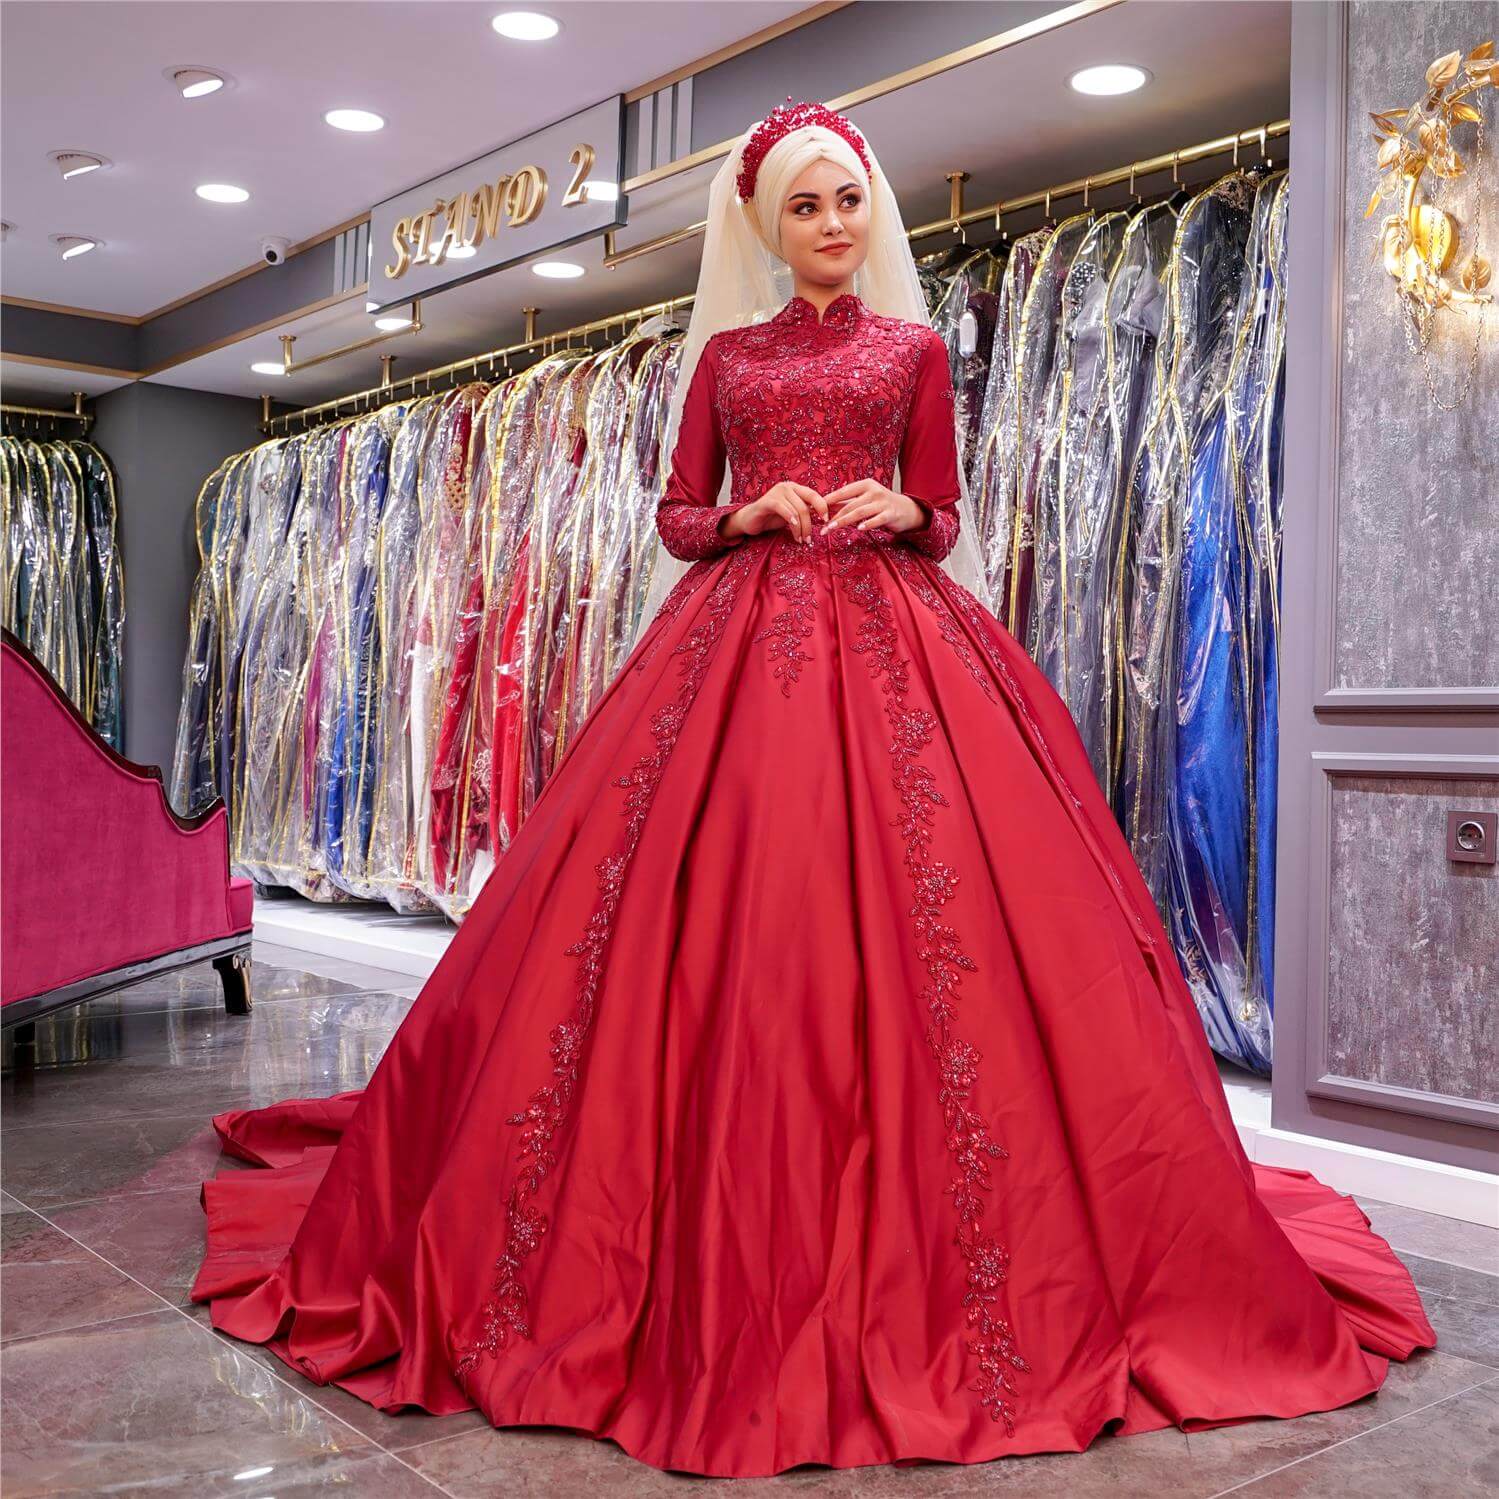 Princess Model Red Hijab Engagement